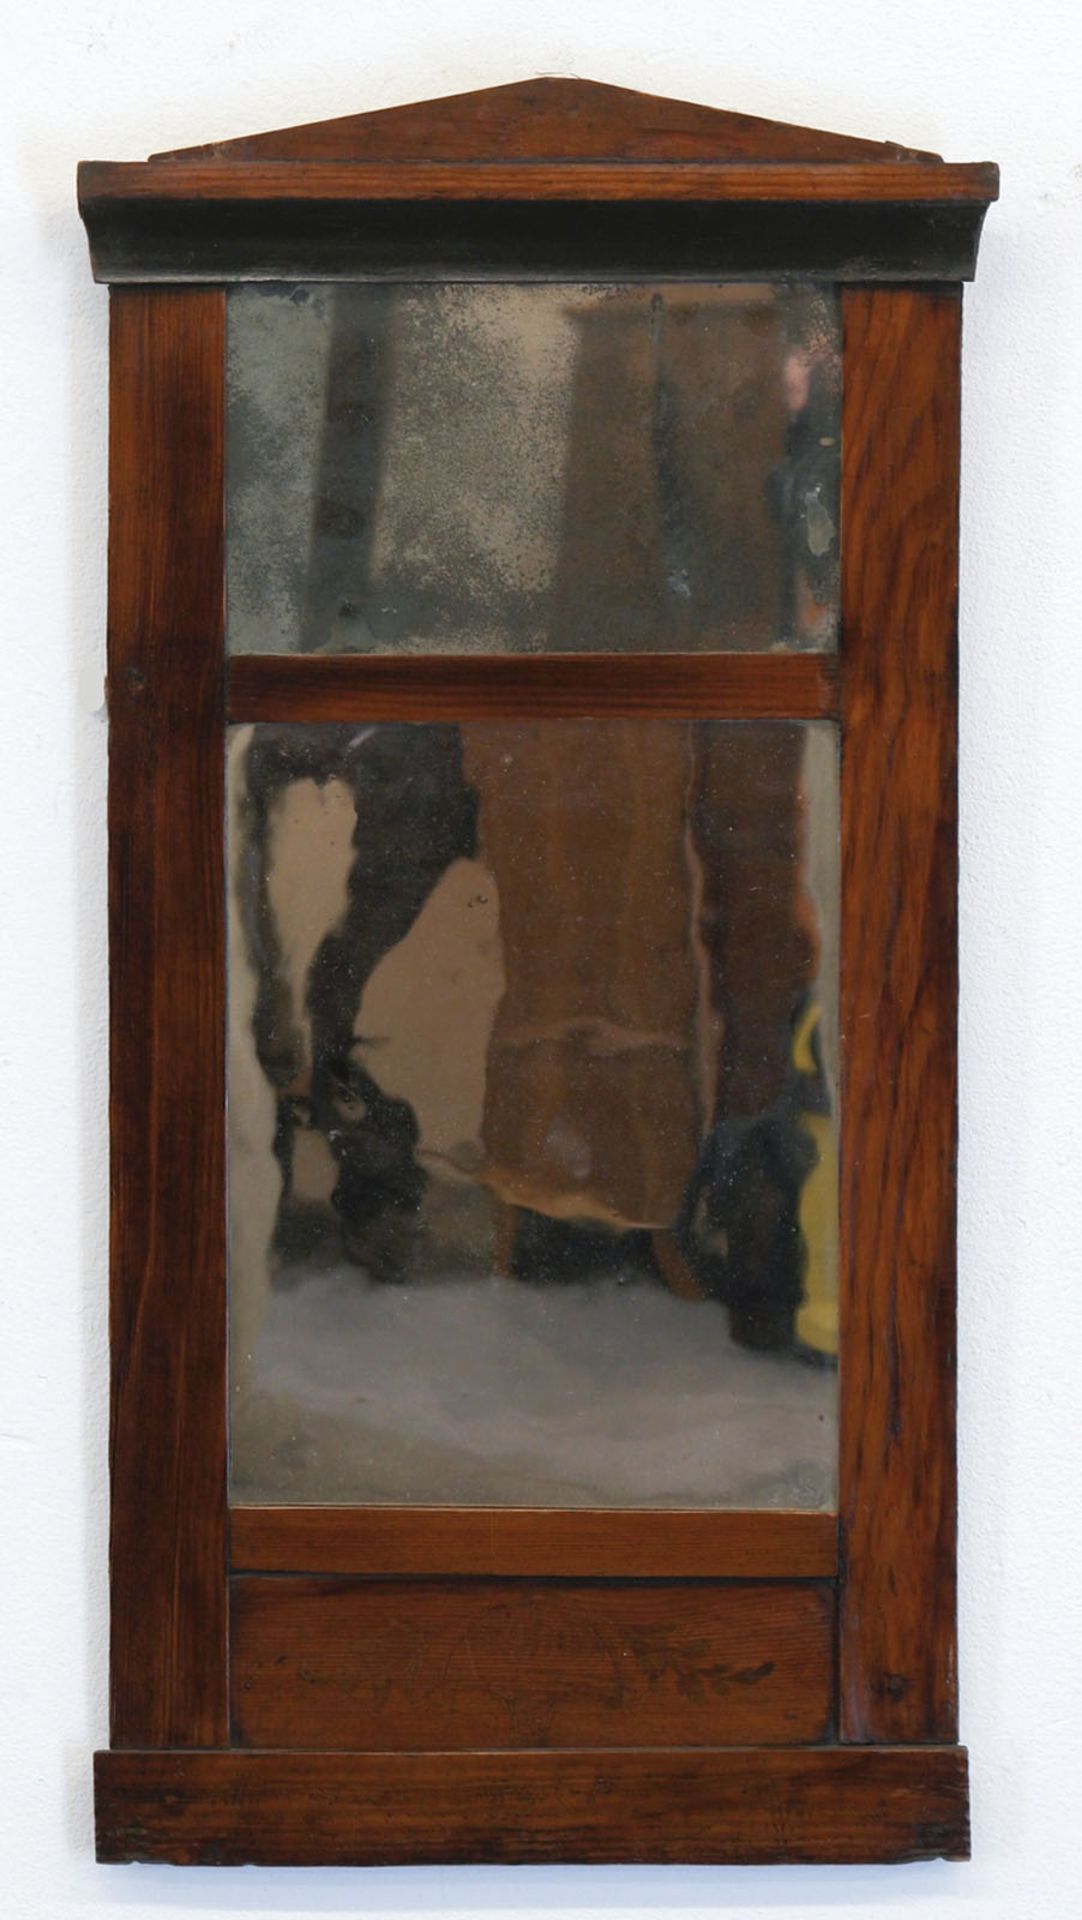 Biedermeier-Spiegel, mahagonifarben, geteiltes Spiegelfeld, Schinkelgiebel, 58x30 cm